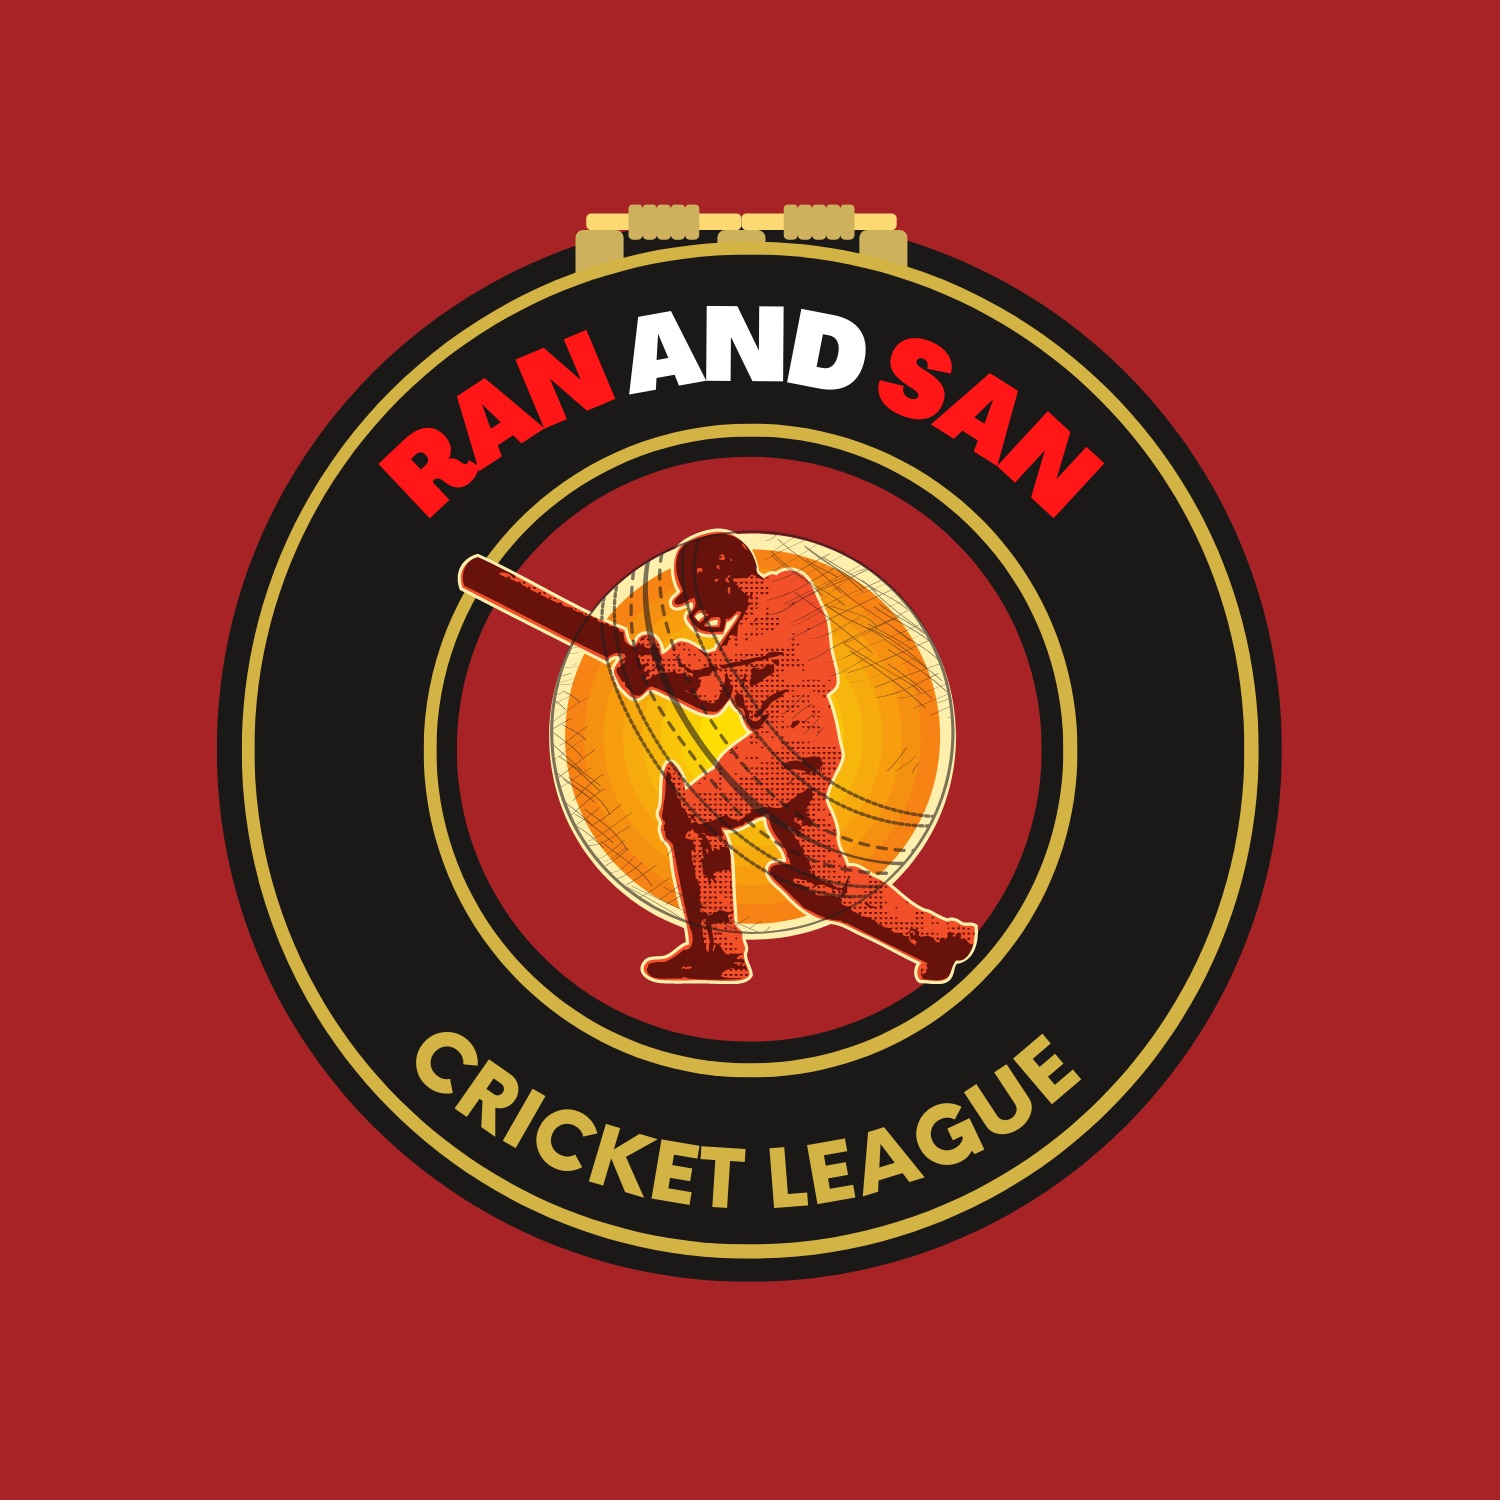 RnS Cricket League 